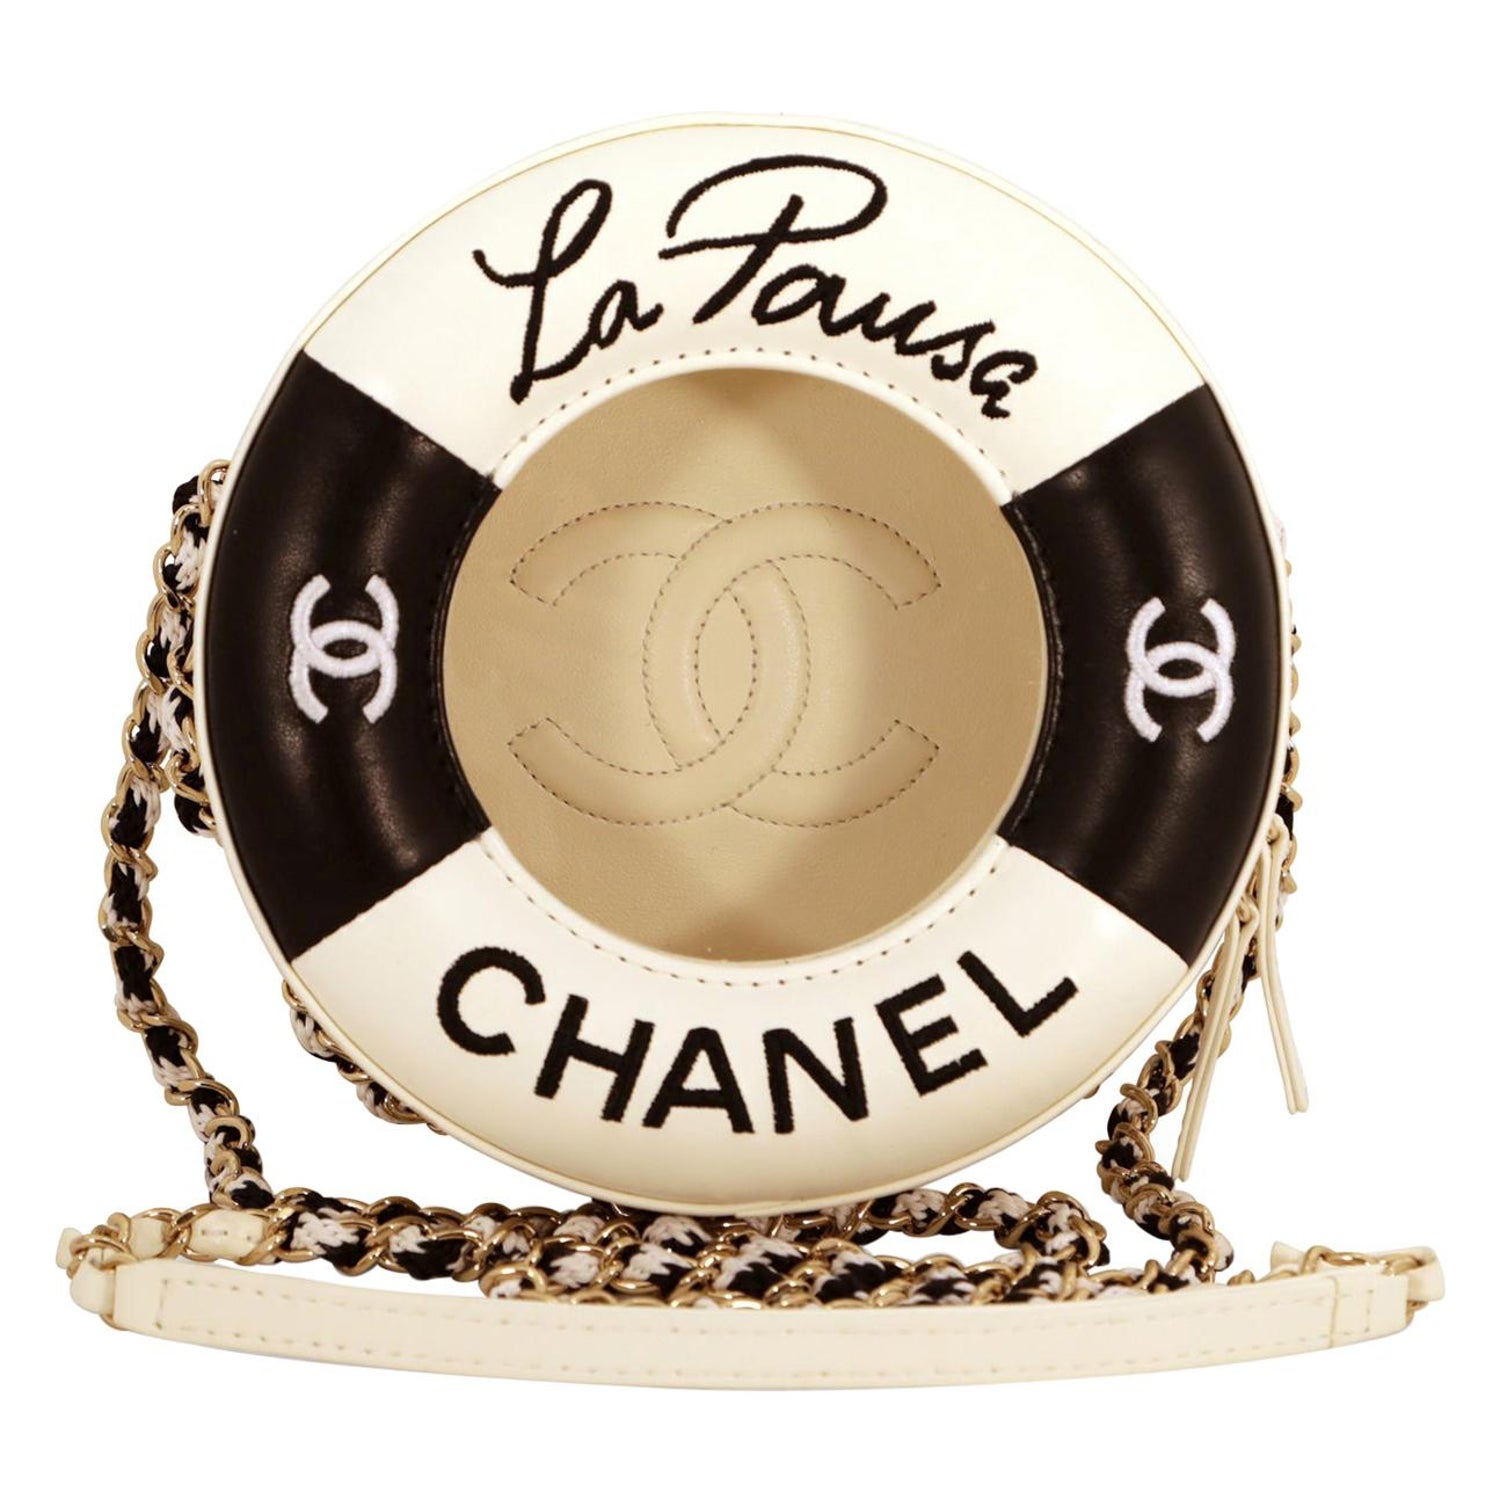 Chanel Life Preserver - For Sale on 1stDibs  chanel life ring, chanel life  buoy, chanel life preserver bag